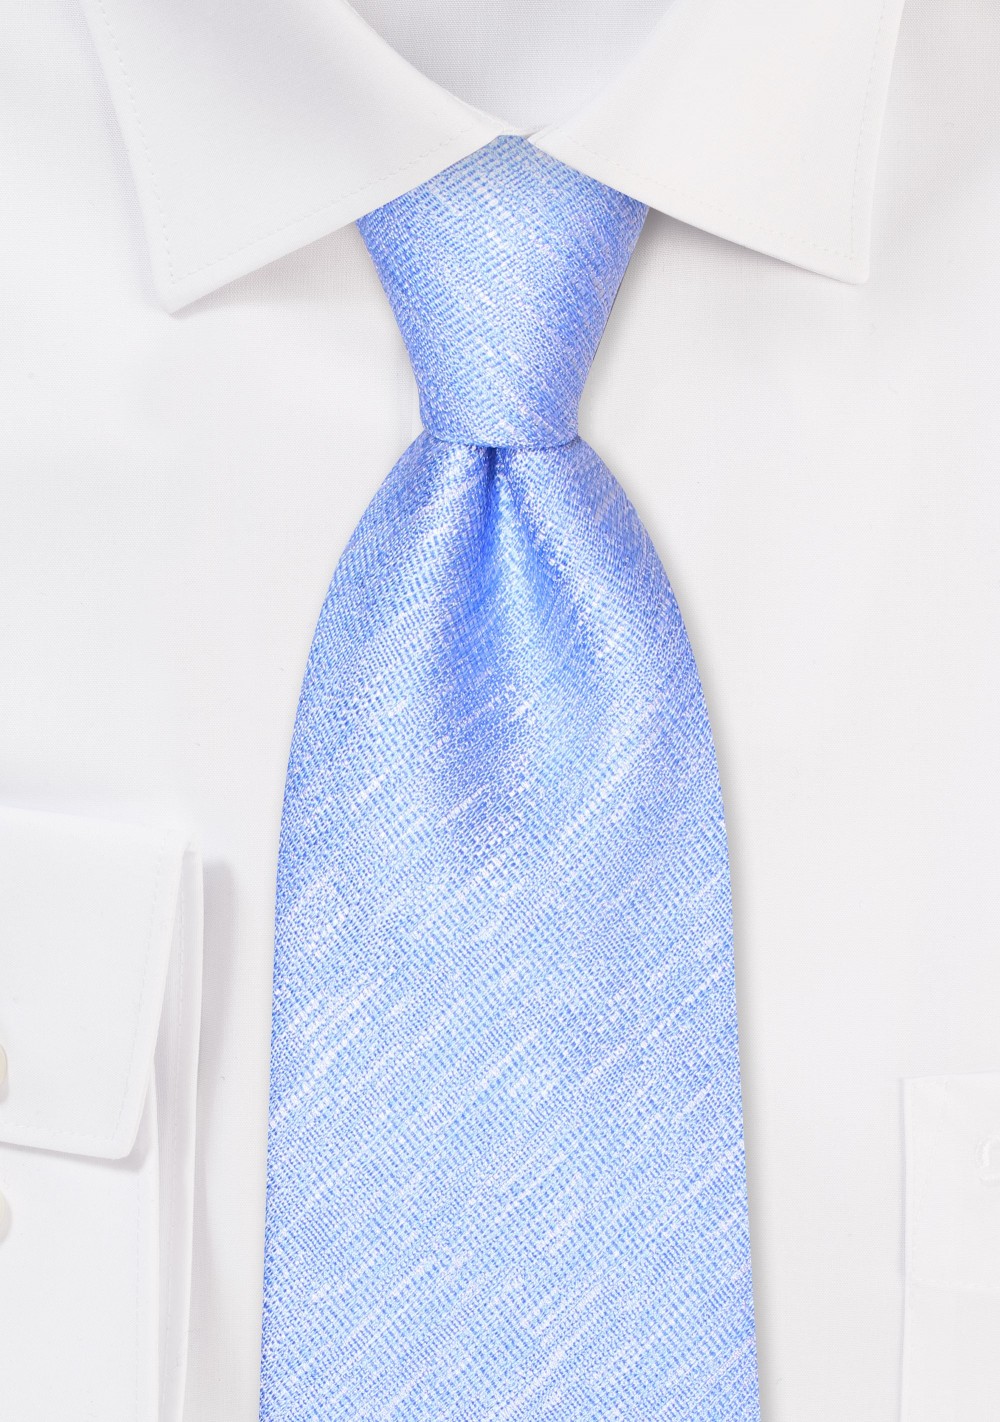 Light Blue Neckties - Baby Blue Ties - Sky Blue Ties - Powder Blue Mens ...